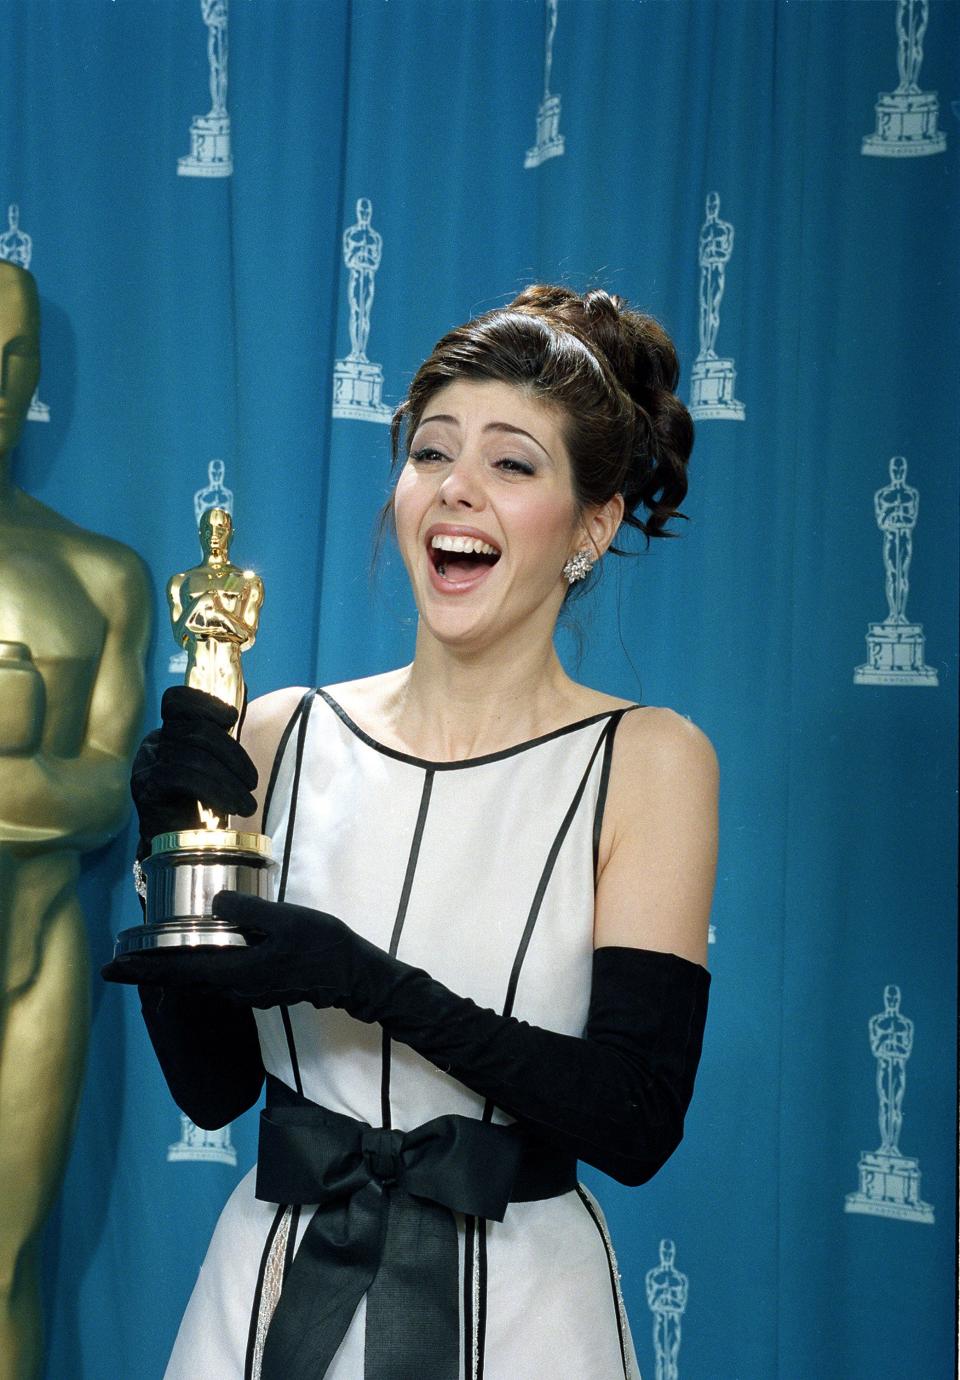 Marisa Tomei was a surprise Oscar winner in 1993 for "My Cousin Vinny."